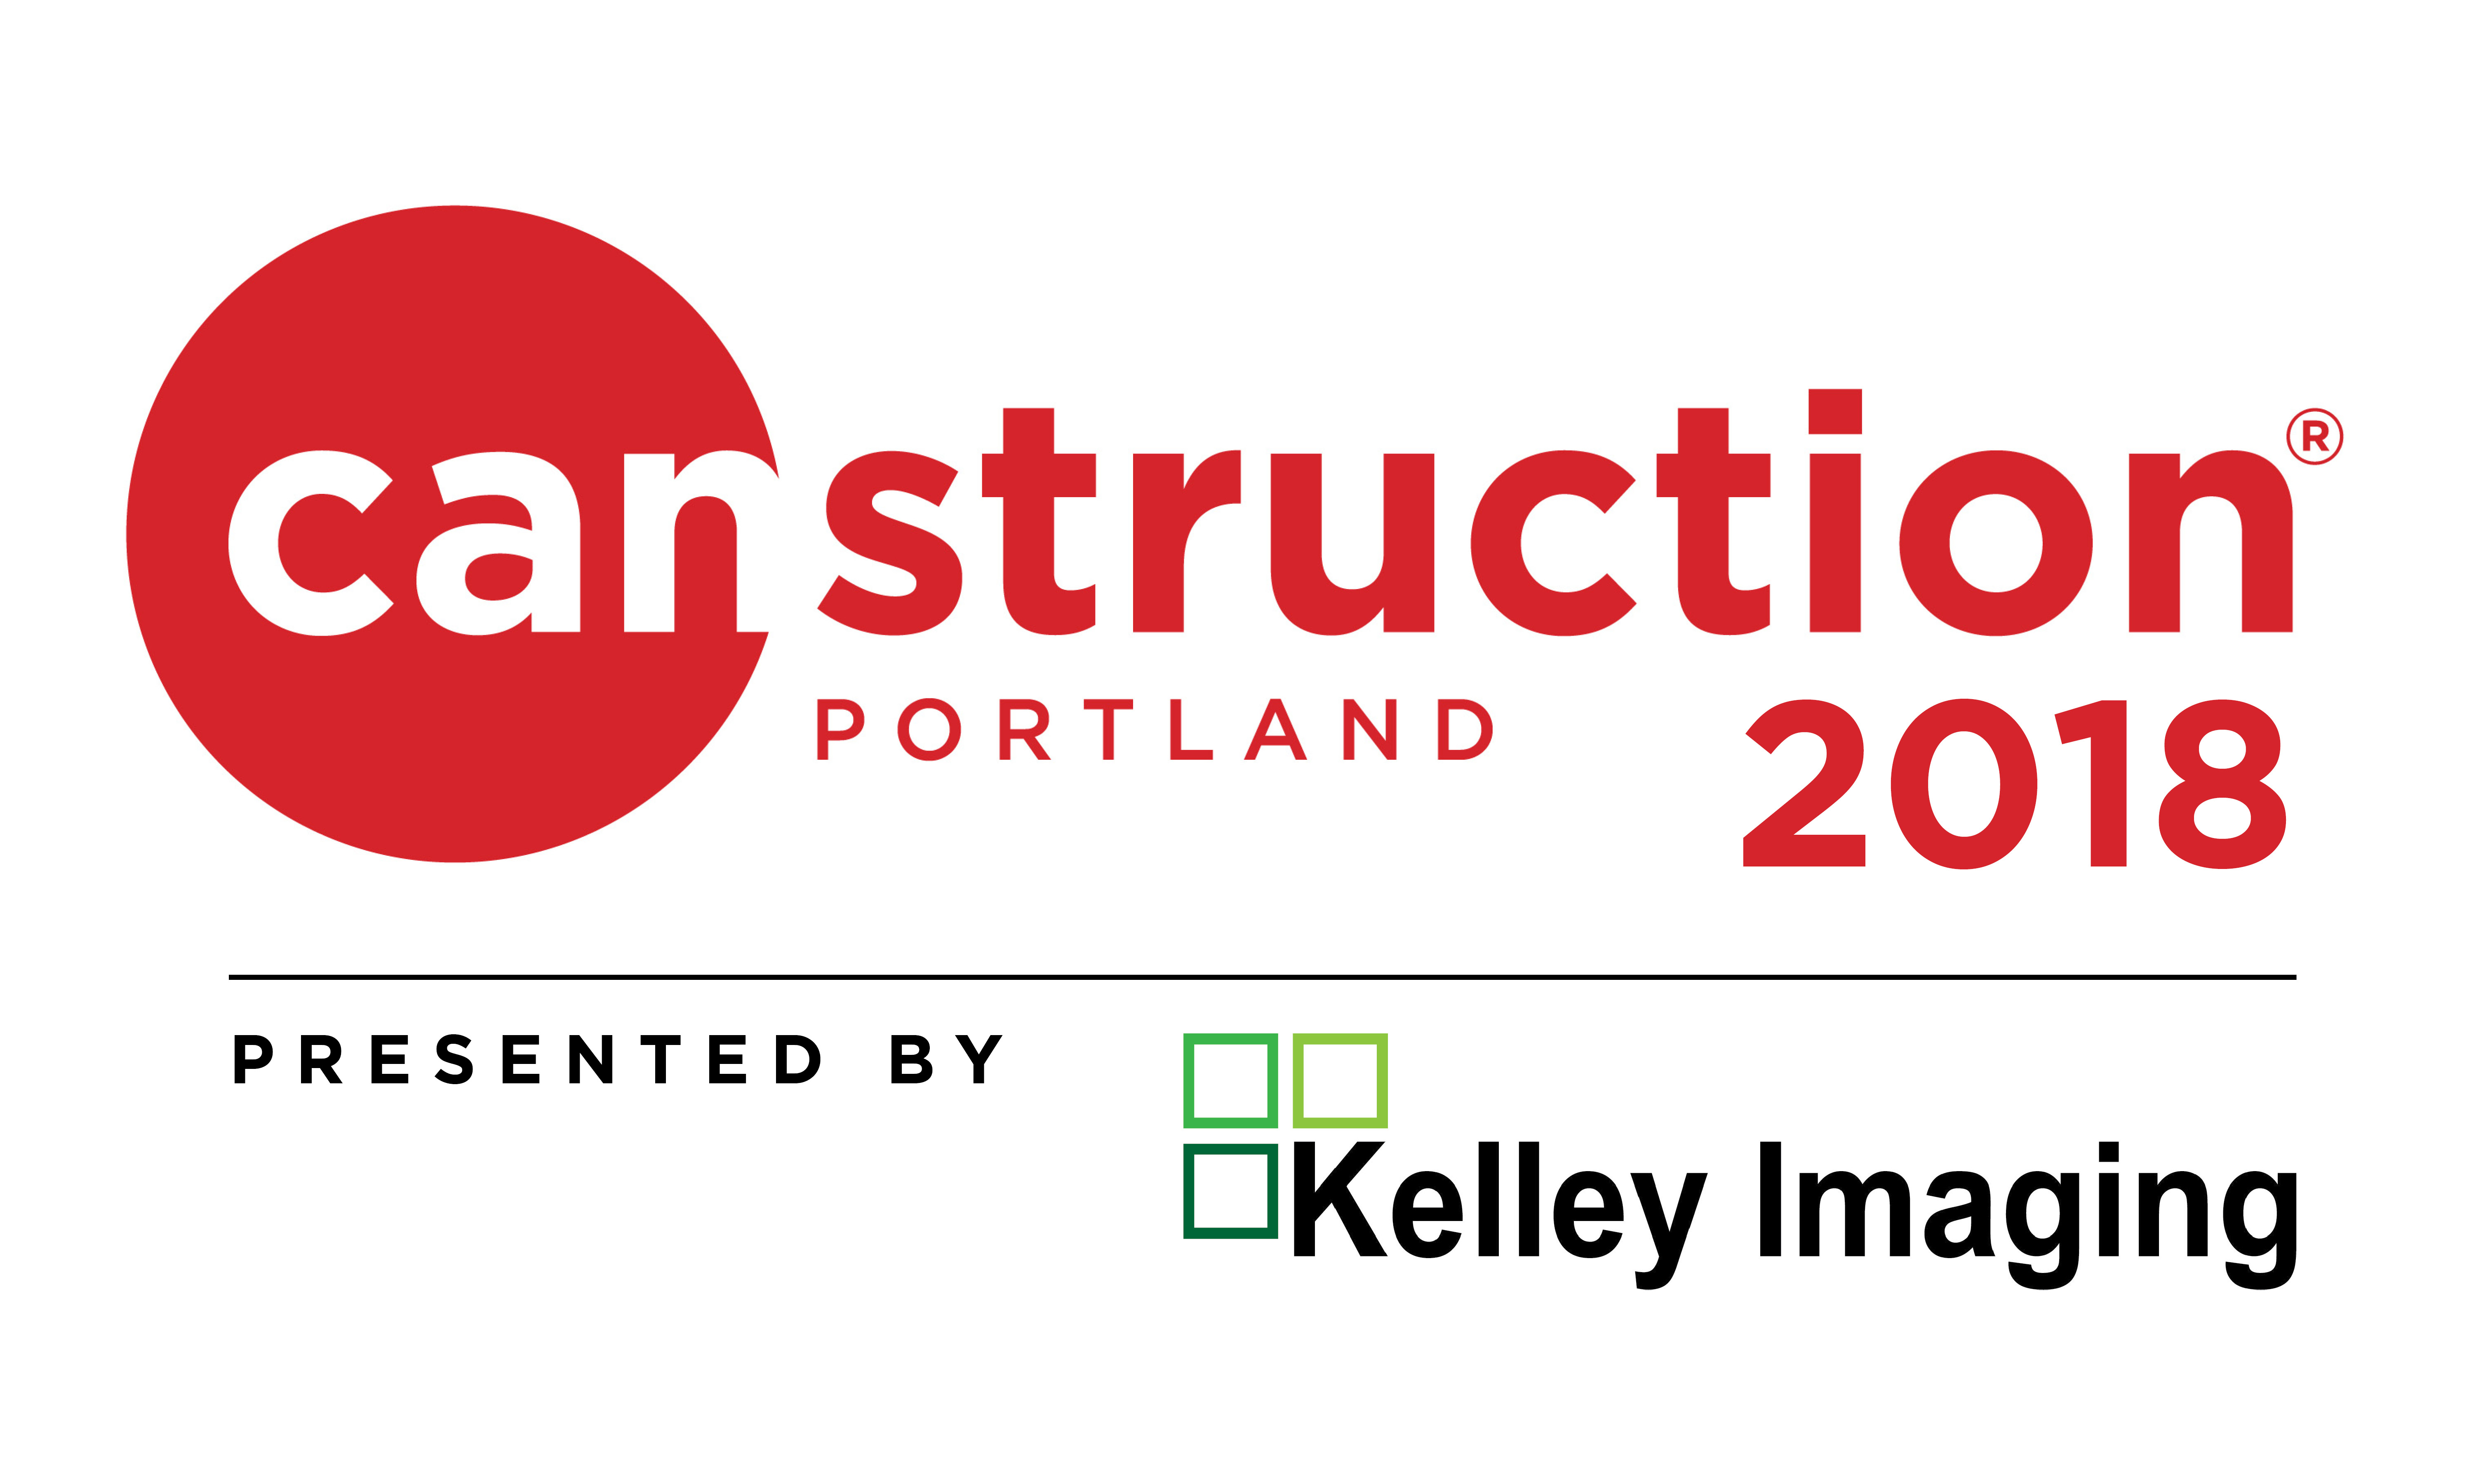 Canstruction Portland logo